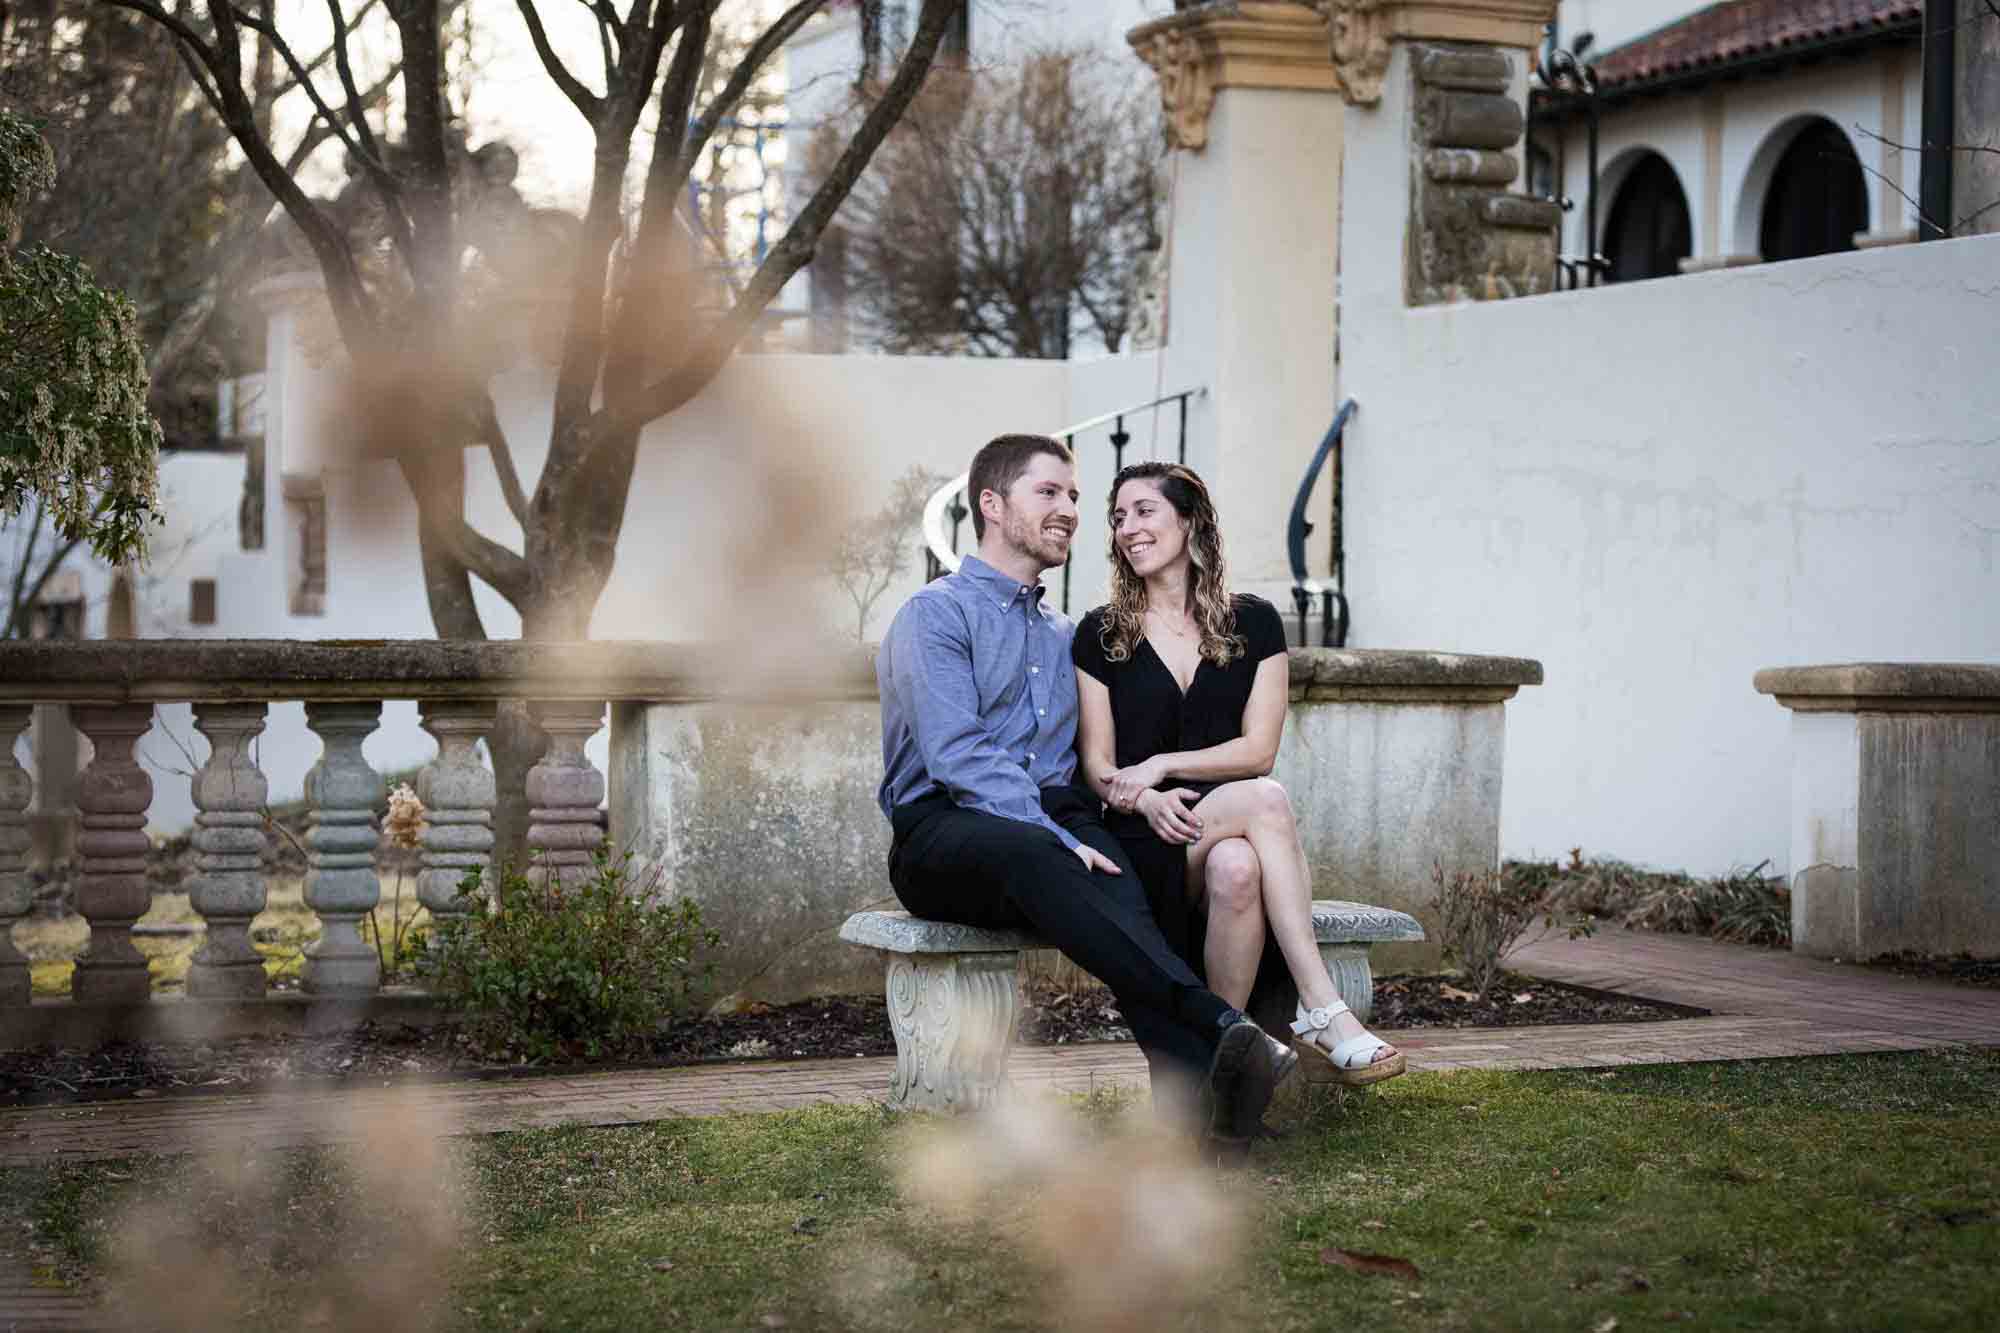 Vanderbilt Museum engagement photos of couple sitting on bench in garden